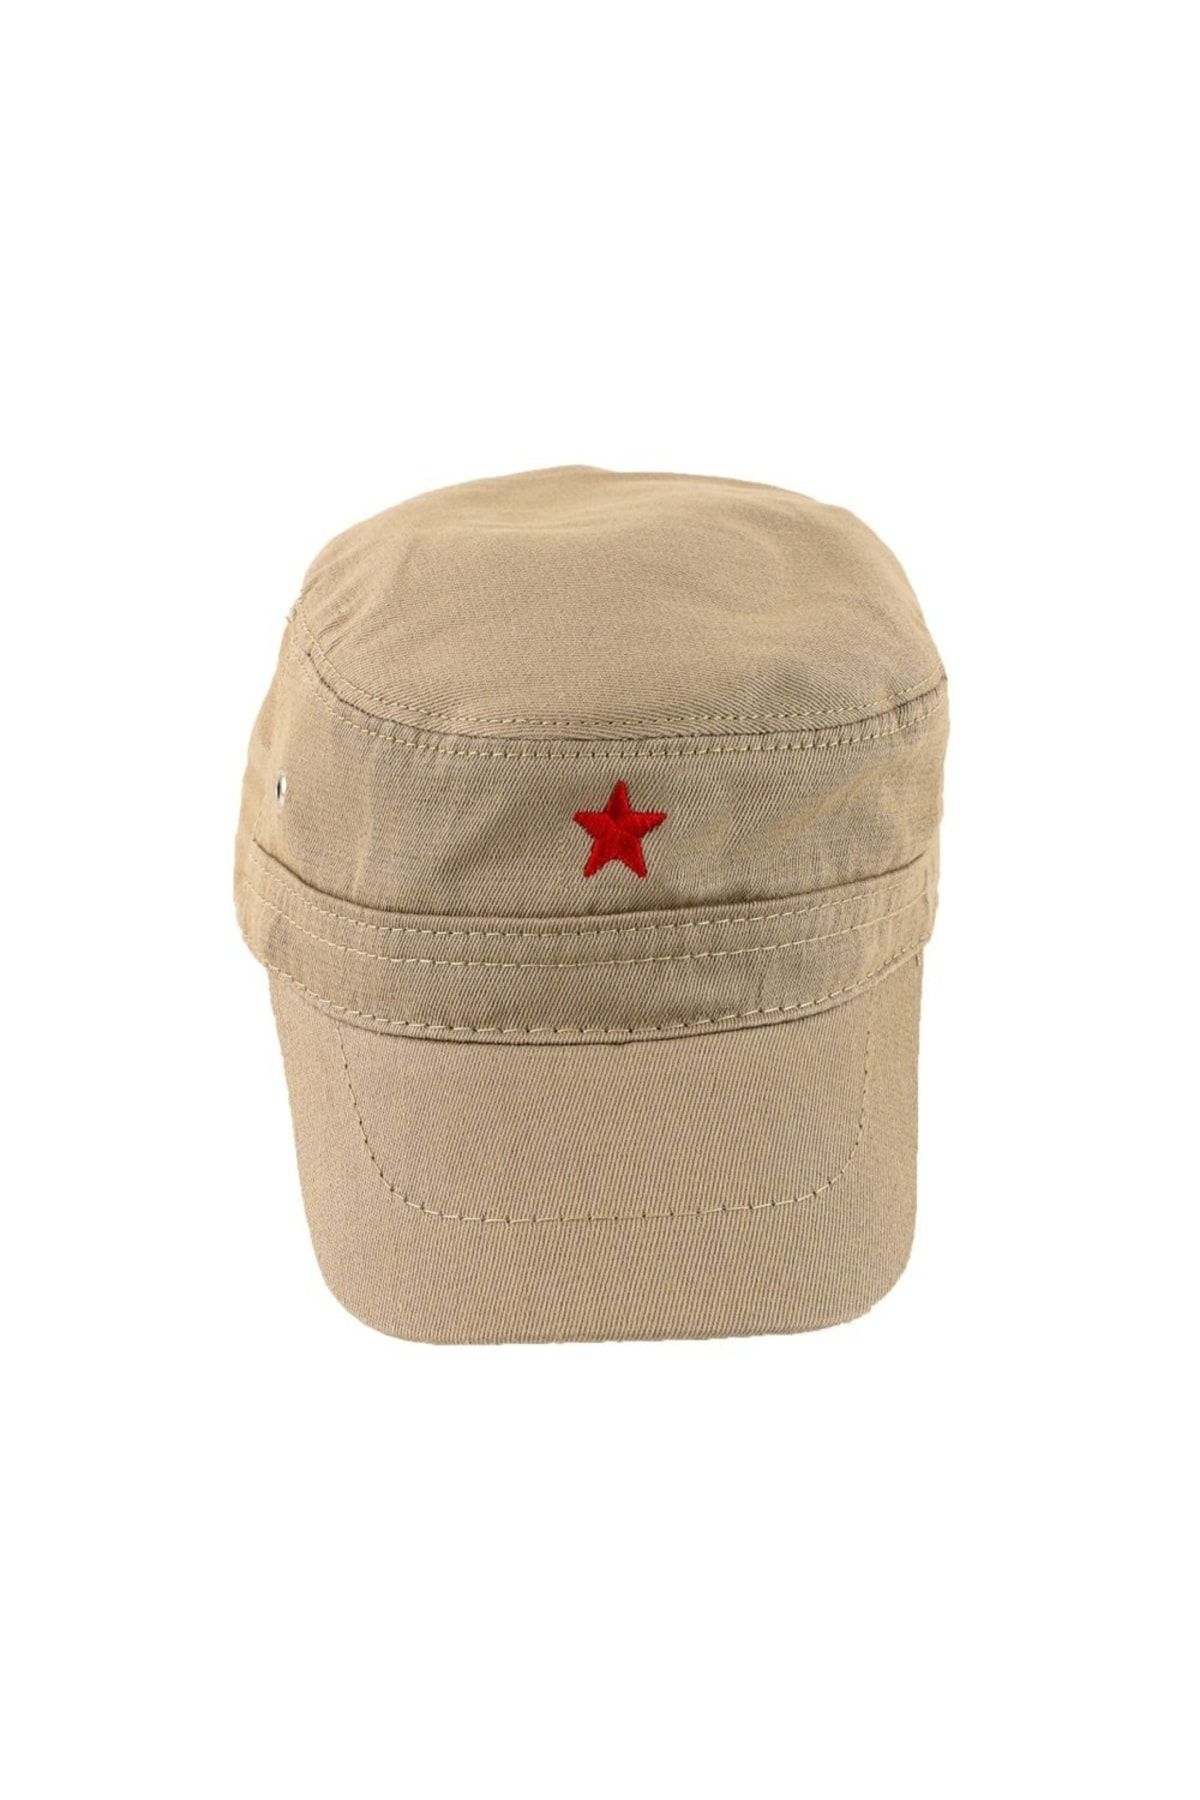 Makro Optik Fidel Castro Şapka